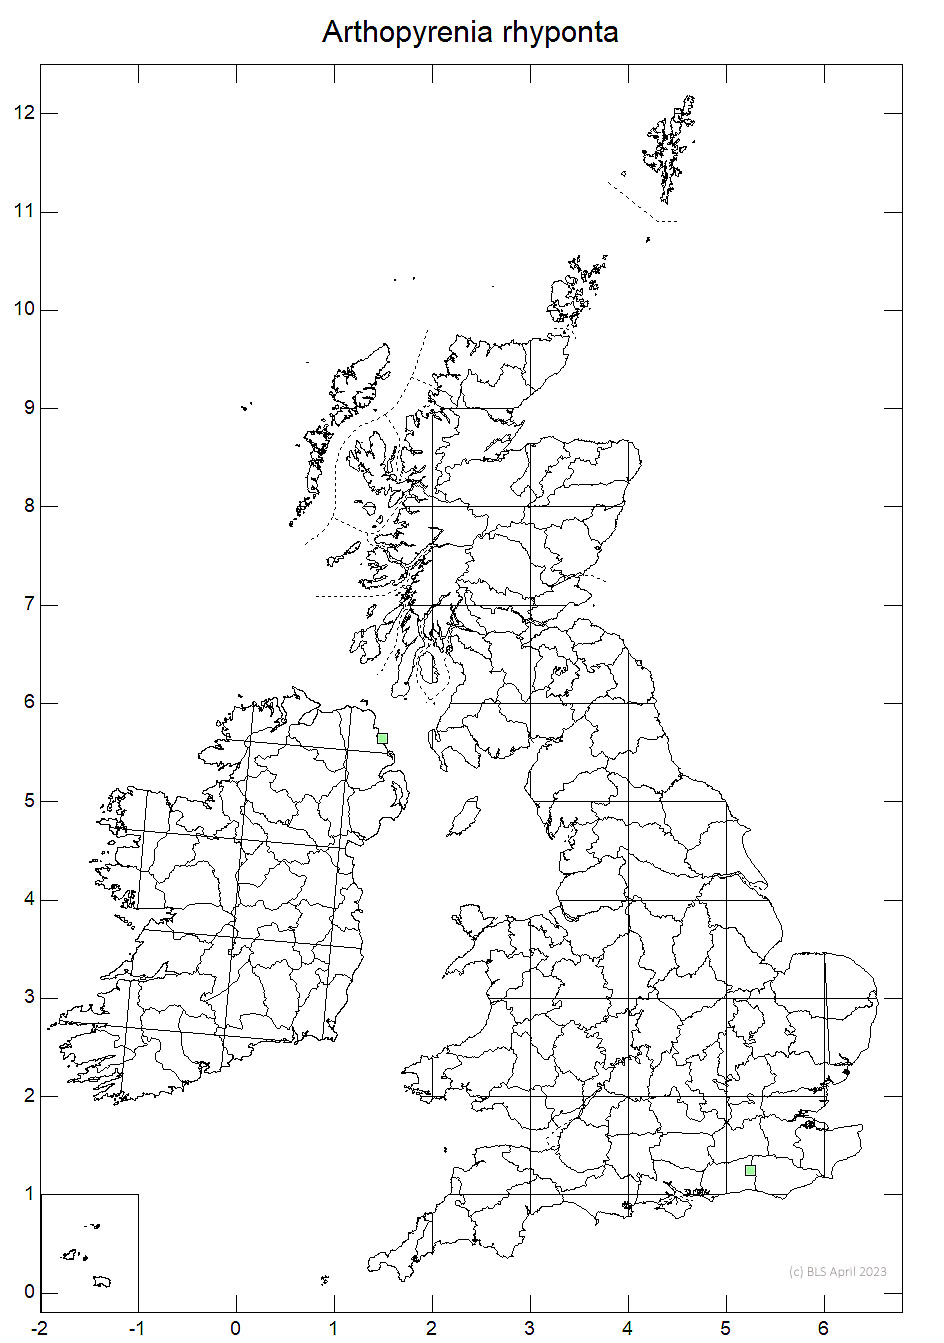 Arthopyrenia rhyponta 10km sq distribution map